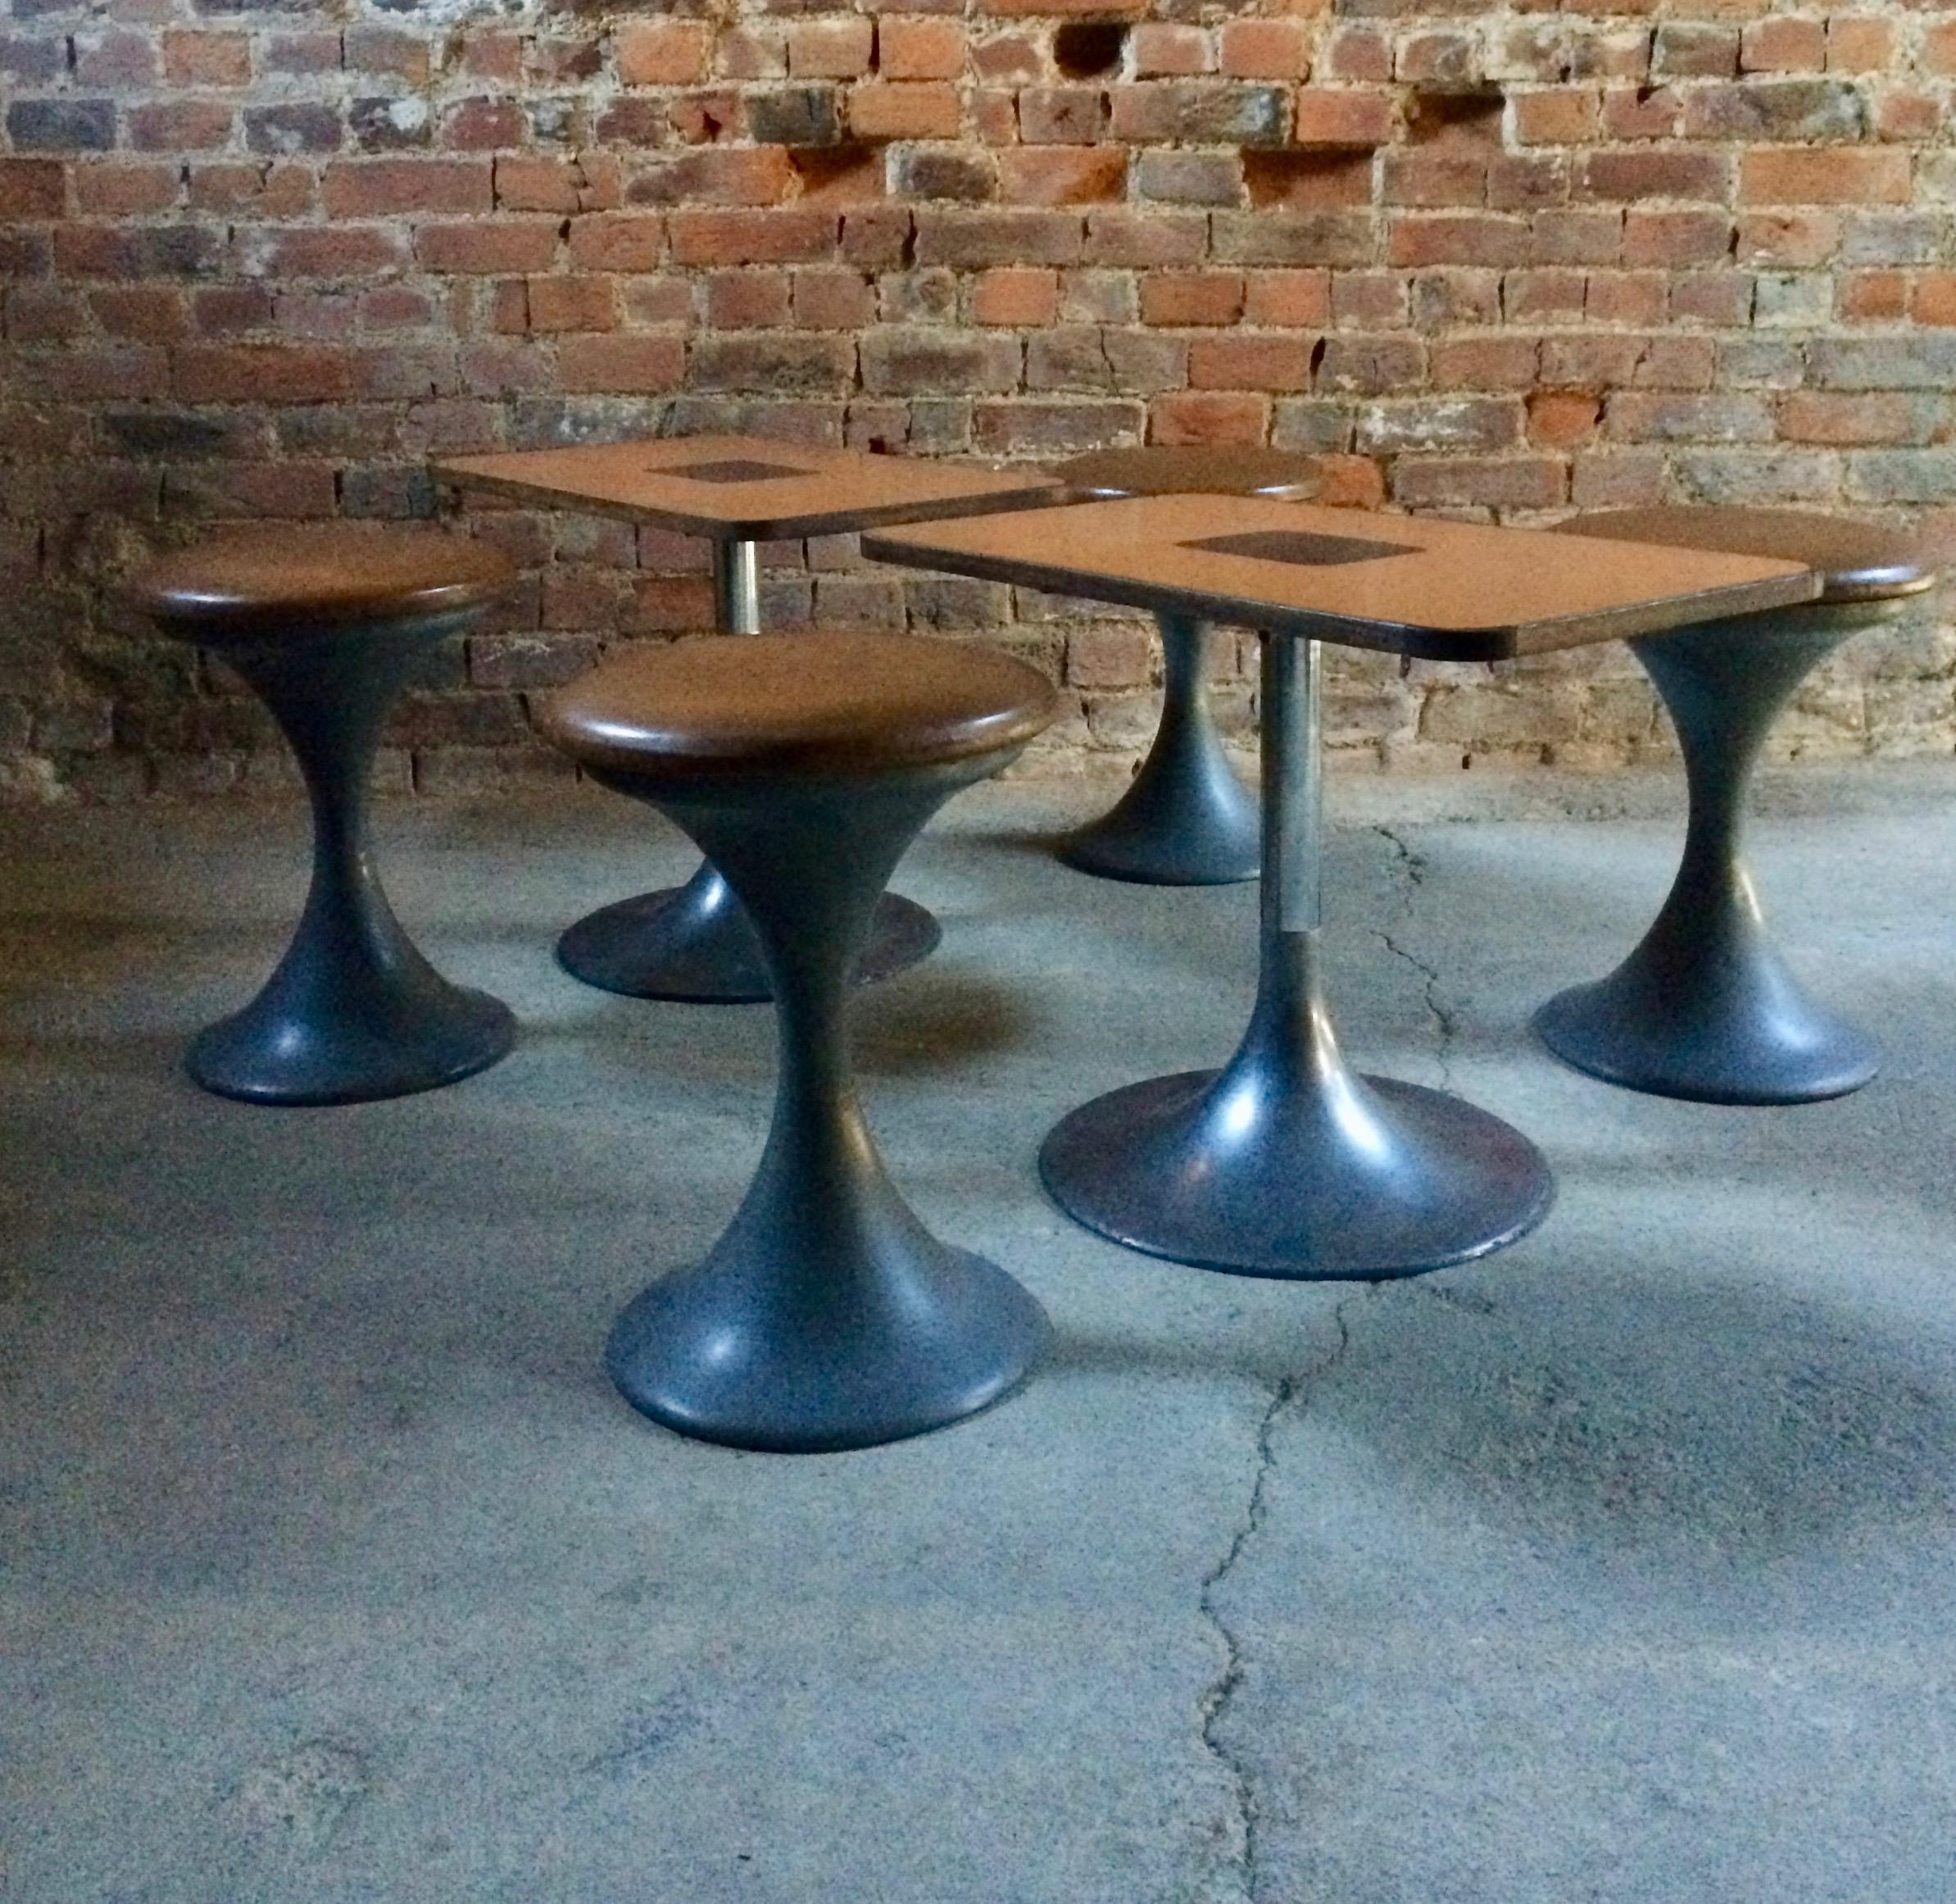 Midcentury Tulip Table and Stools 1960s Coffee Table Tulip Chairs Vintage Danish 2